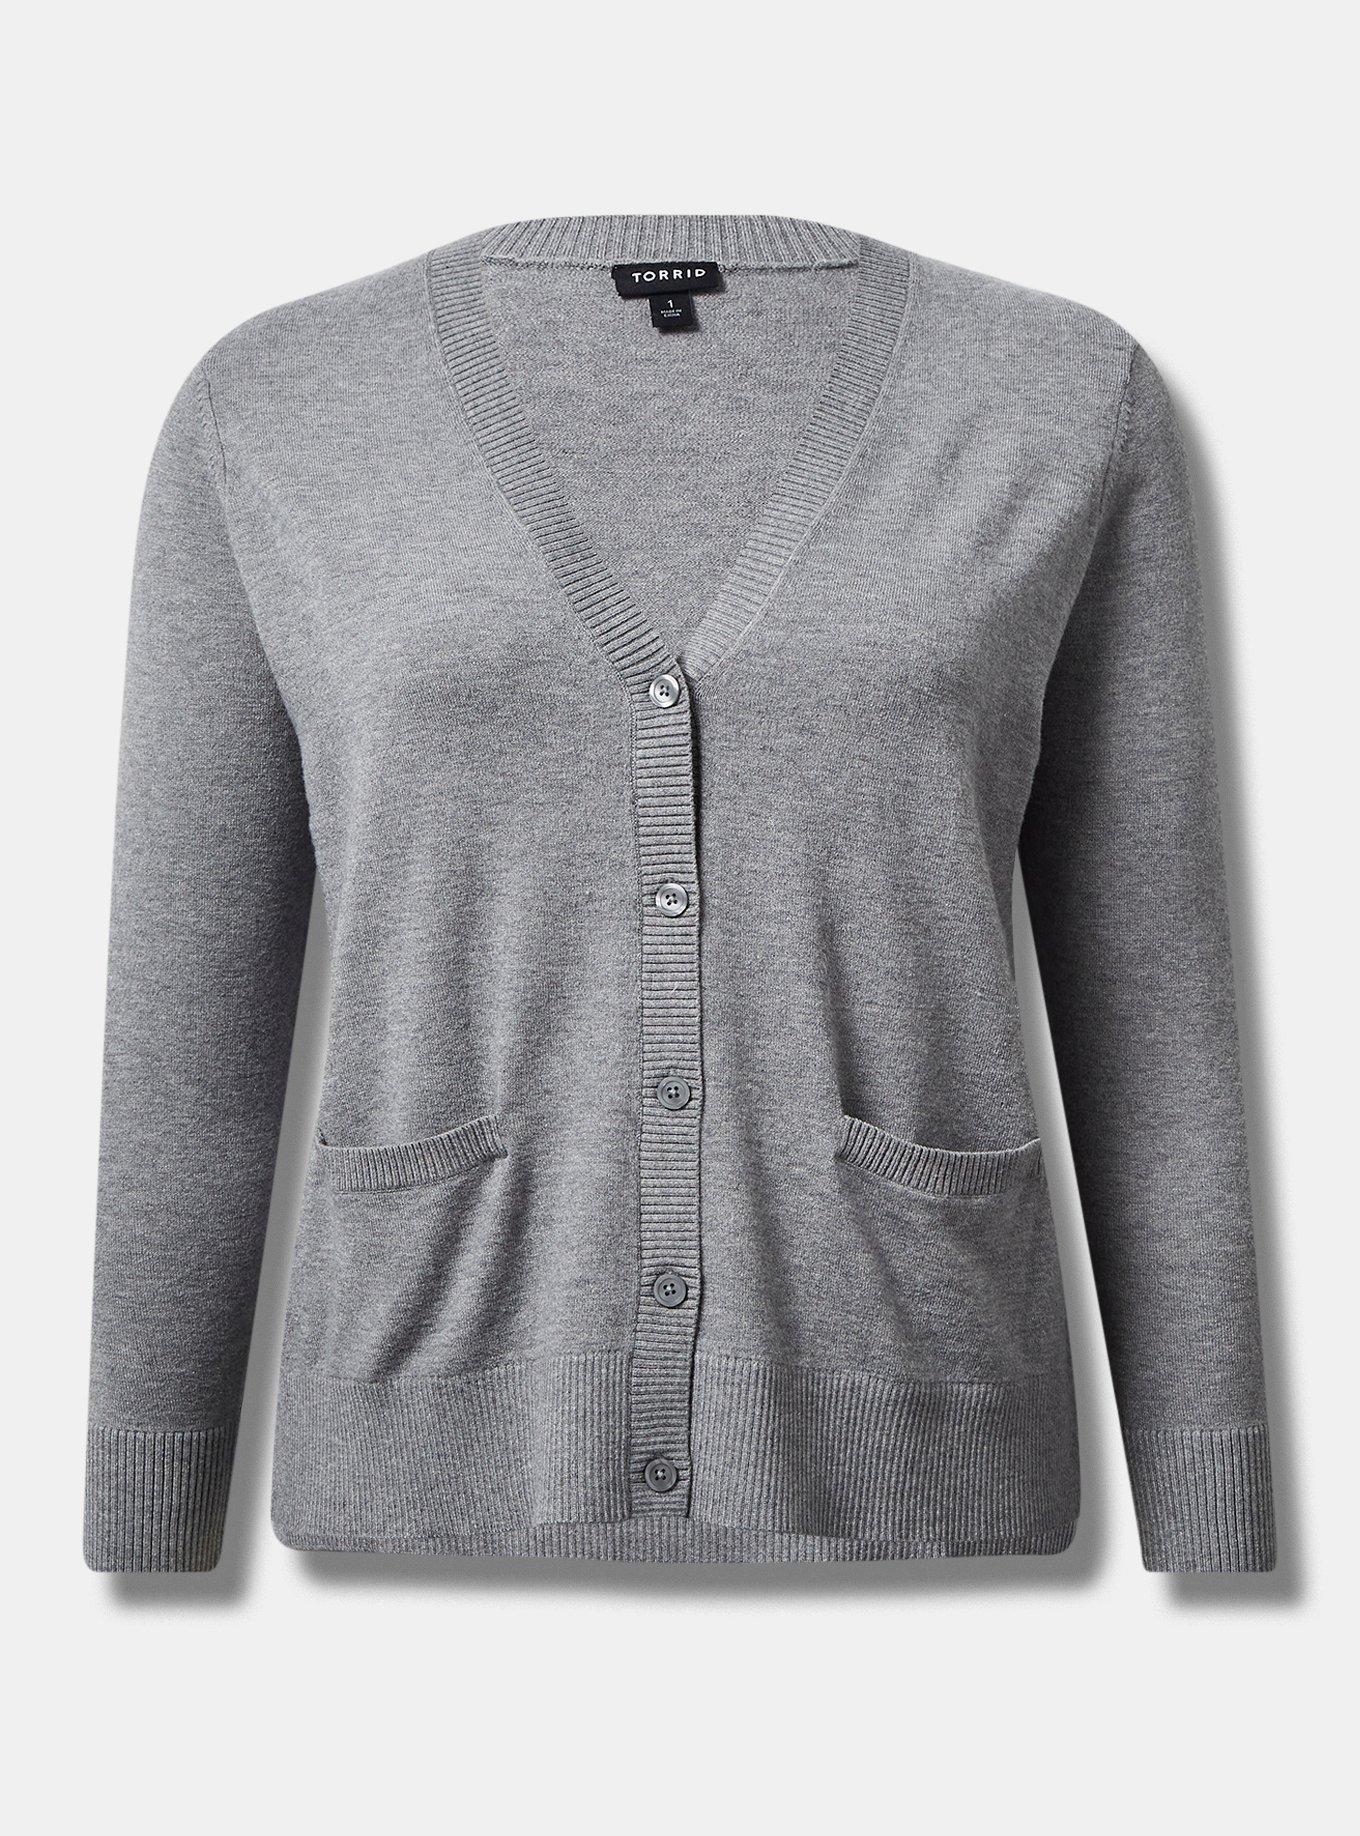 Plus Size - Everyday Soft V-Neck Pocket Cardigan Sweater - Torrid